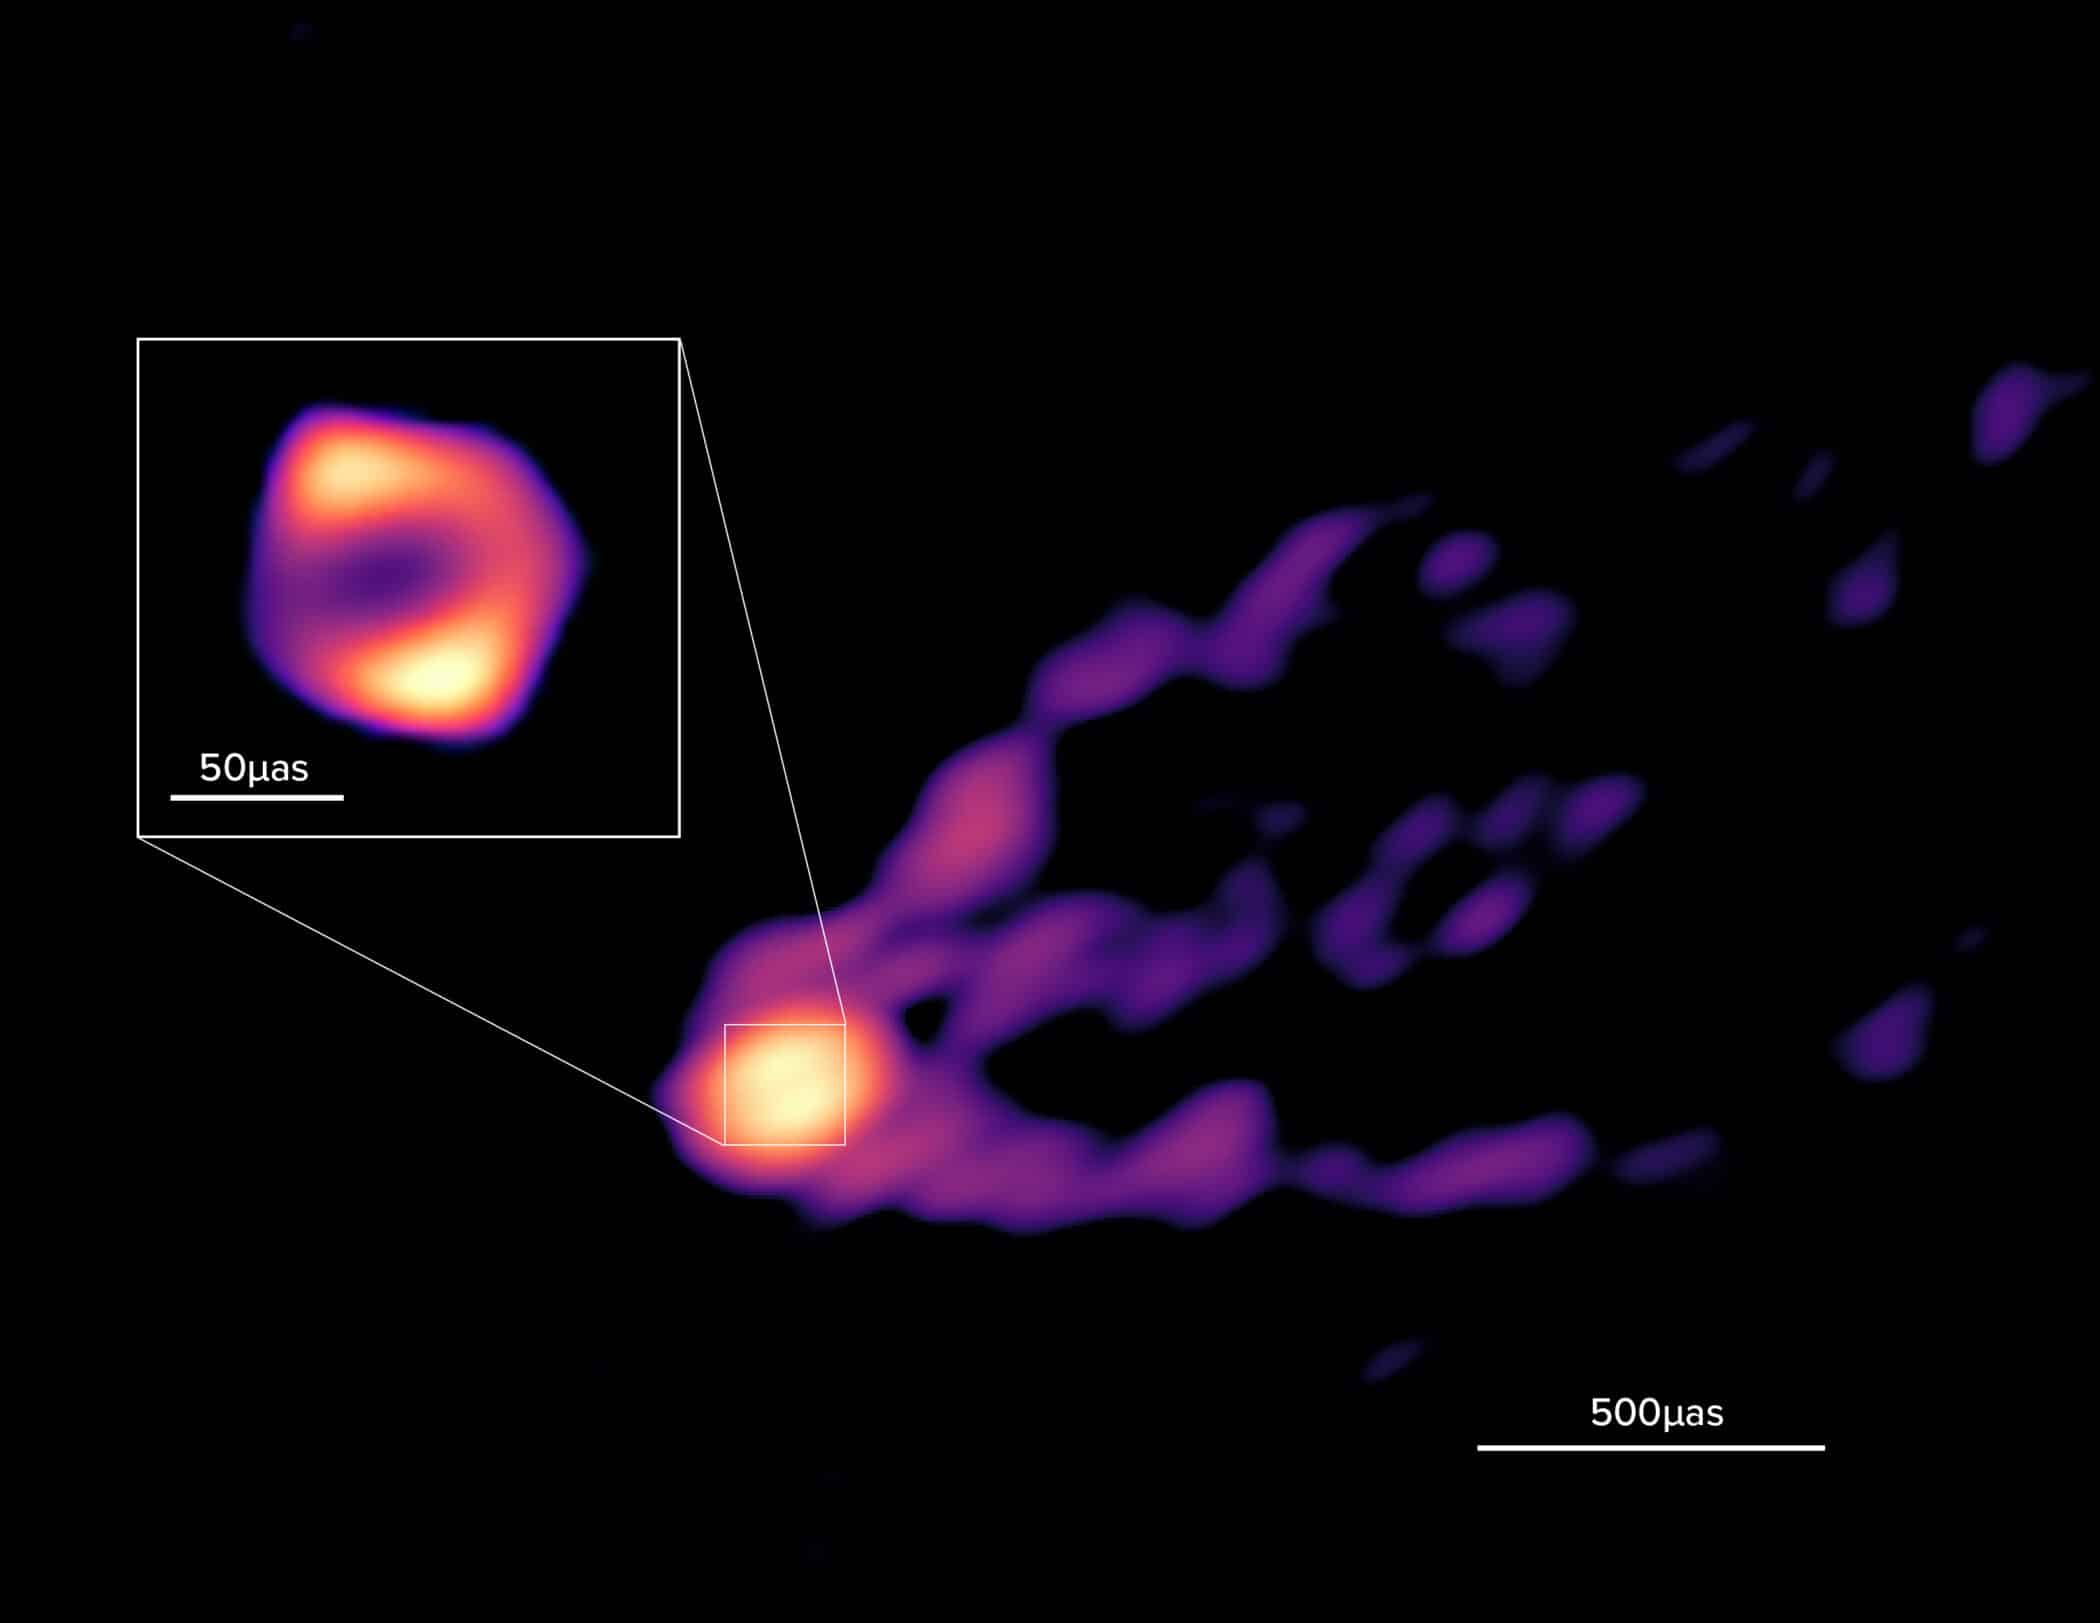 M87 science image labels revised